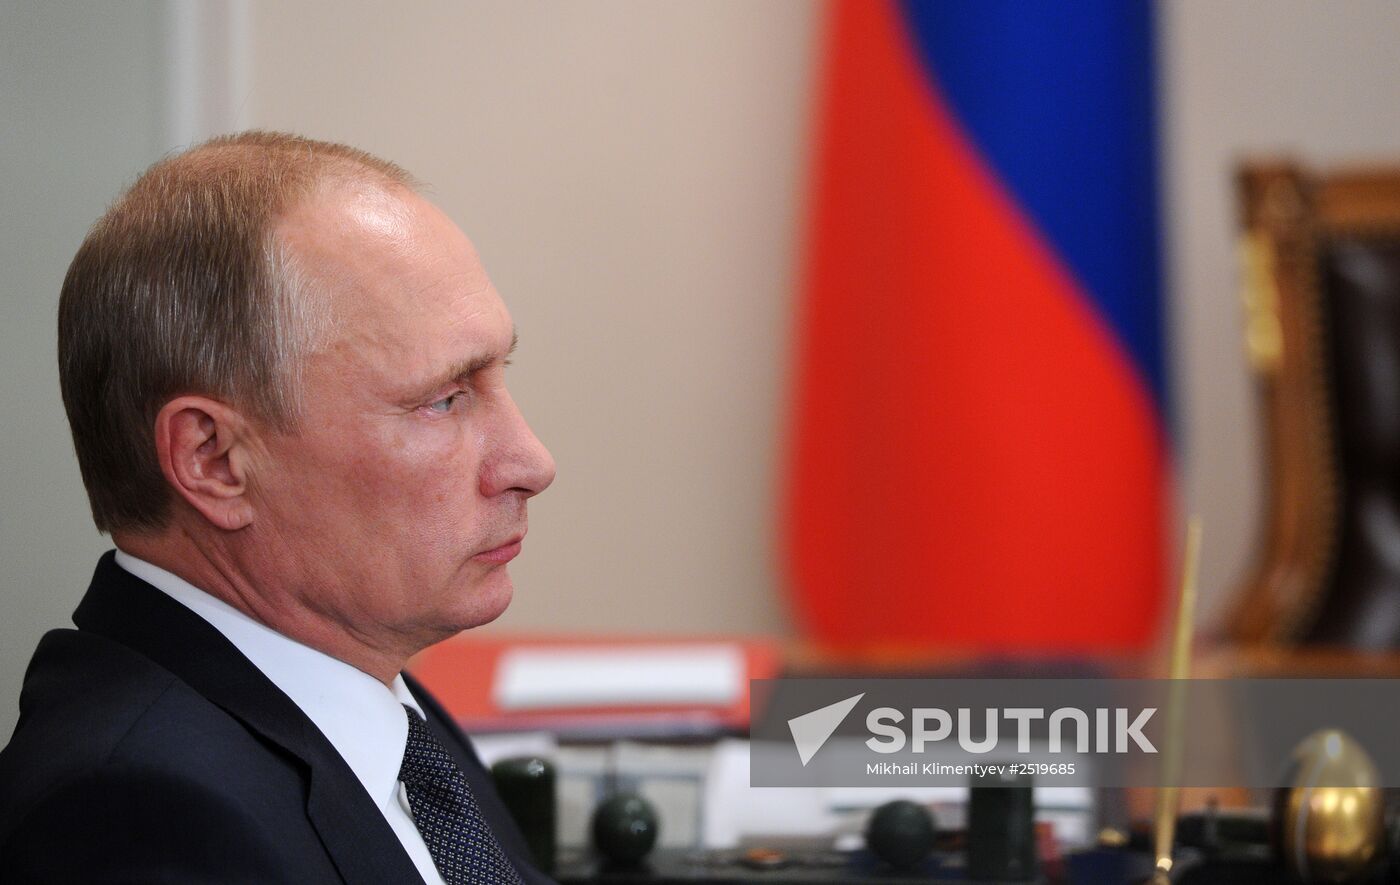 Vladimir Putin meets with Vladimir Potanin